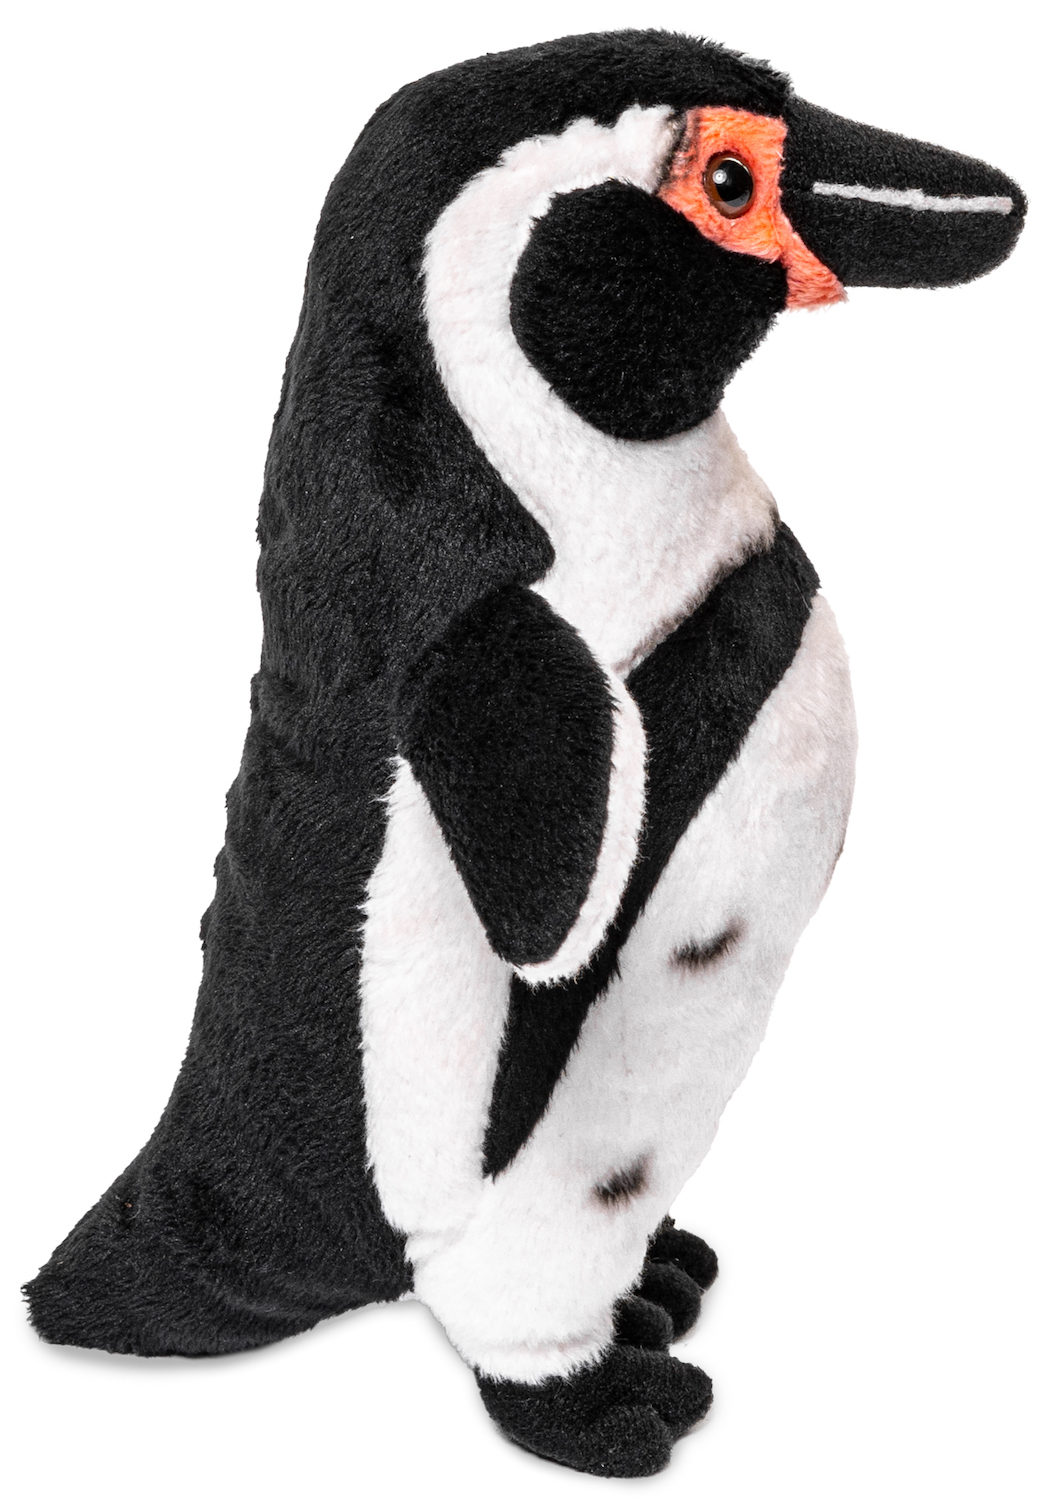 Humboldt Penguin - 19 cm (height) - Plush Bird, Penguin - Plush